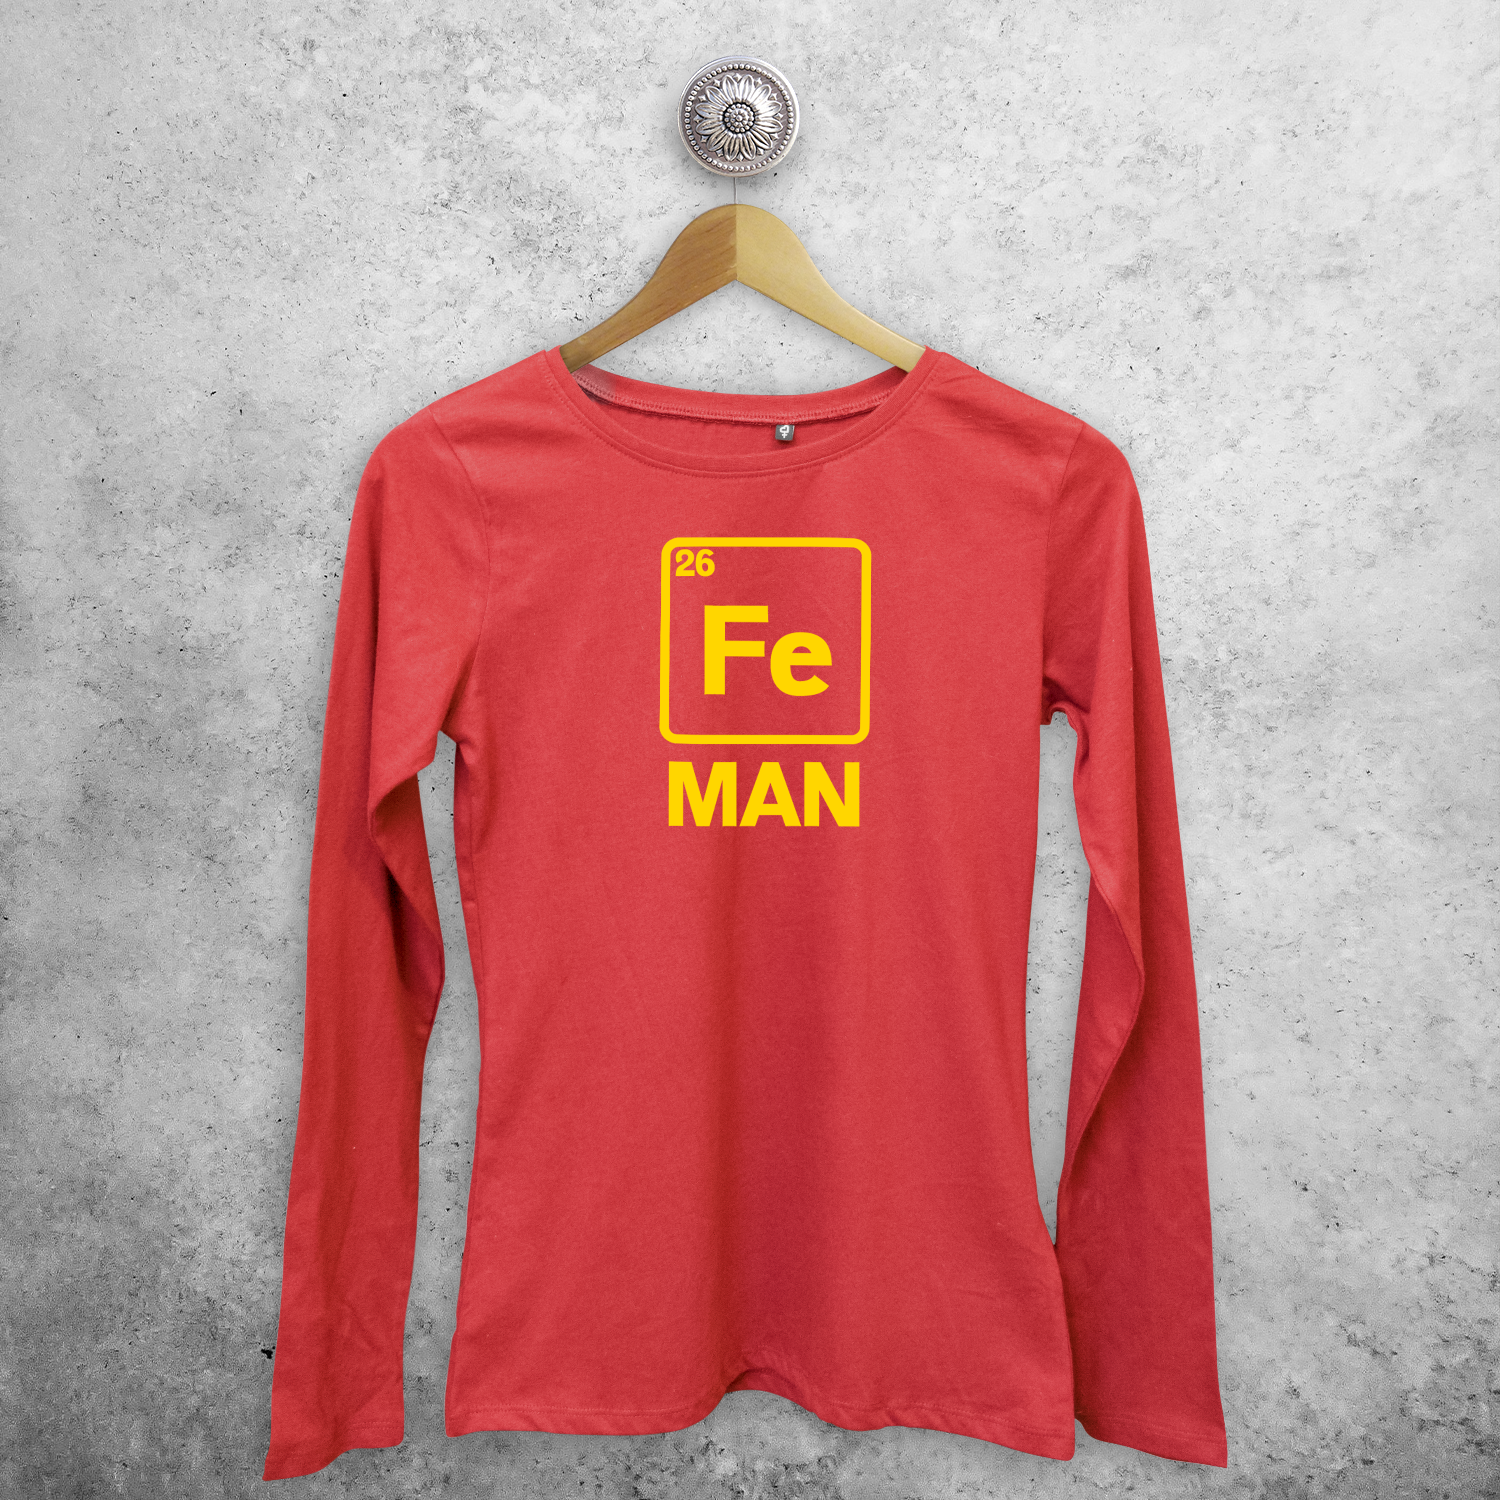 'Fe man' adult longsleeve shirt